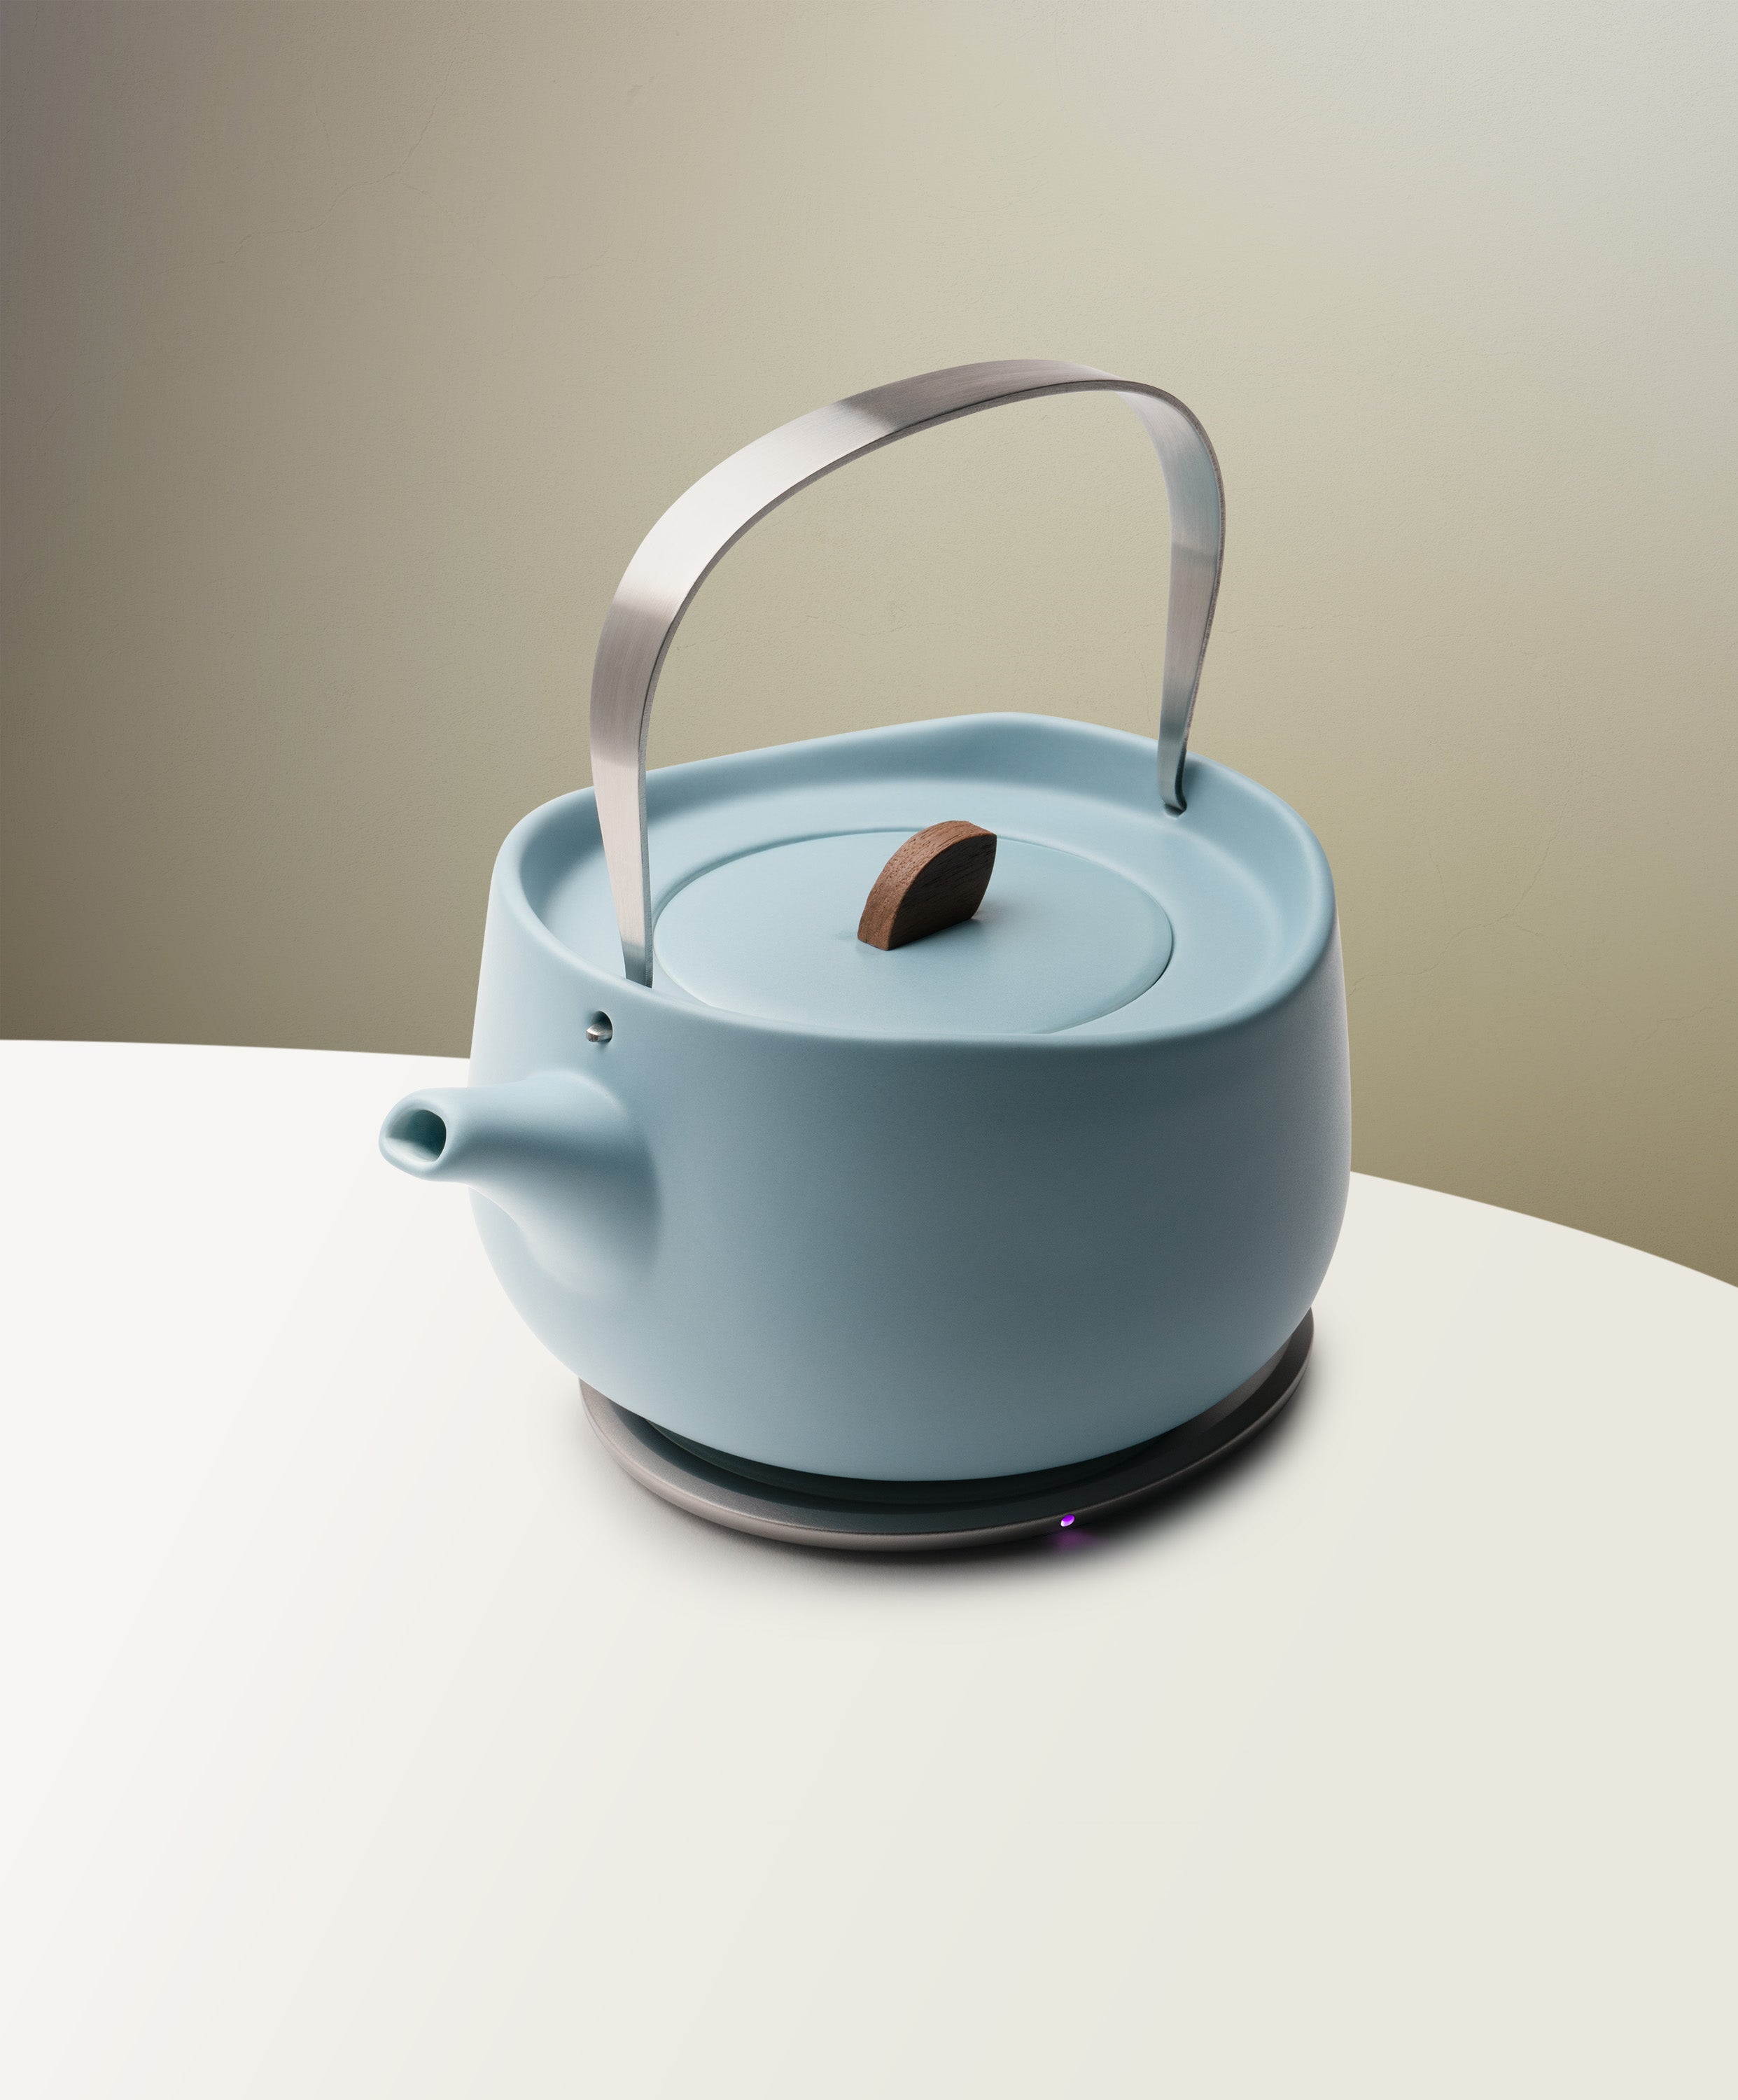 Leiph Self-heating Teapot Set - Moonmist Blue